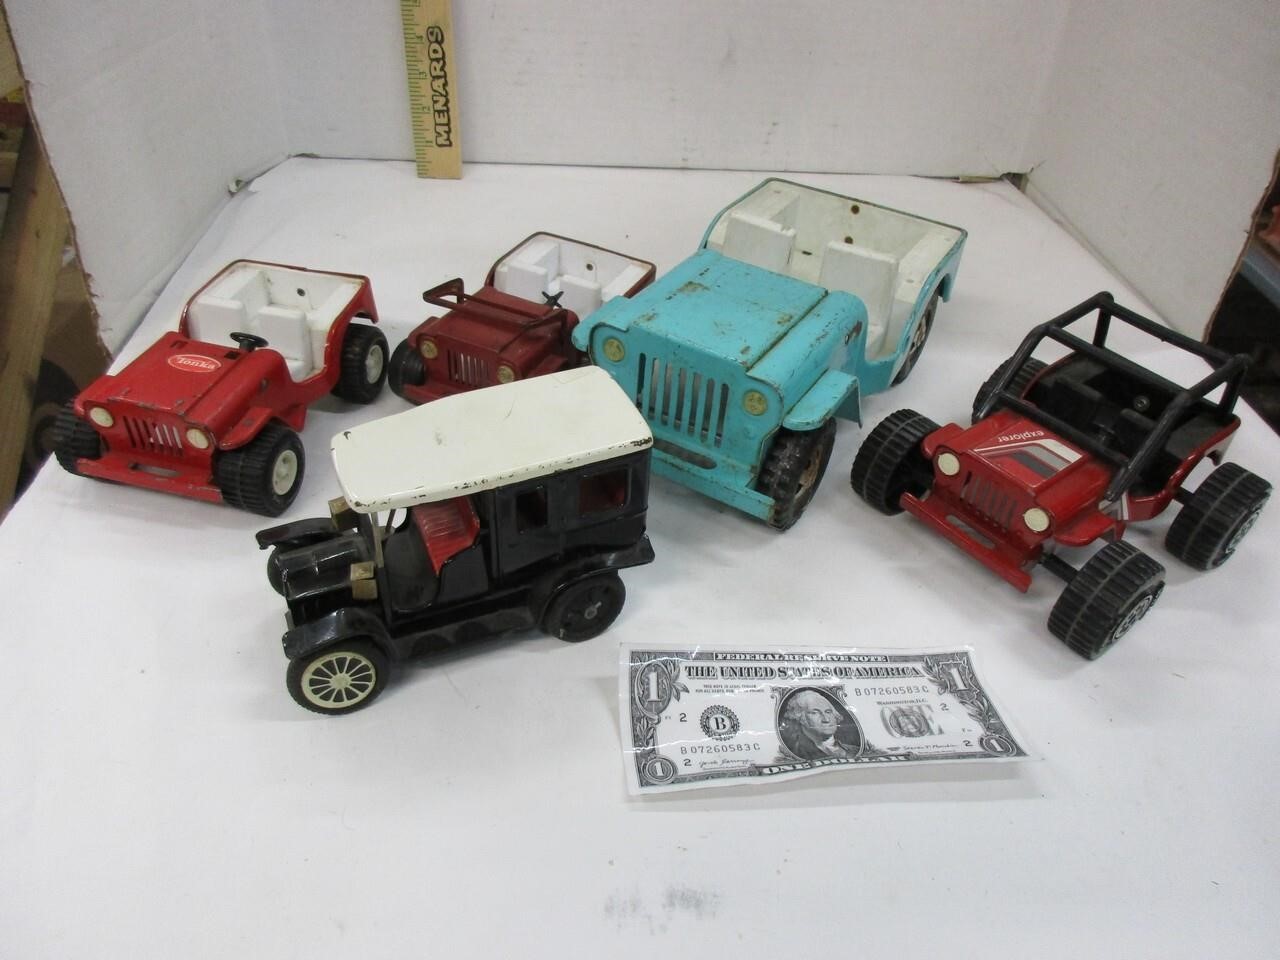 Vintage toy vehicles, mostly Tonka